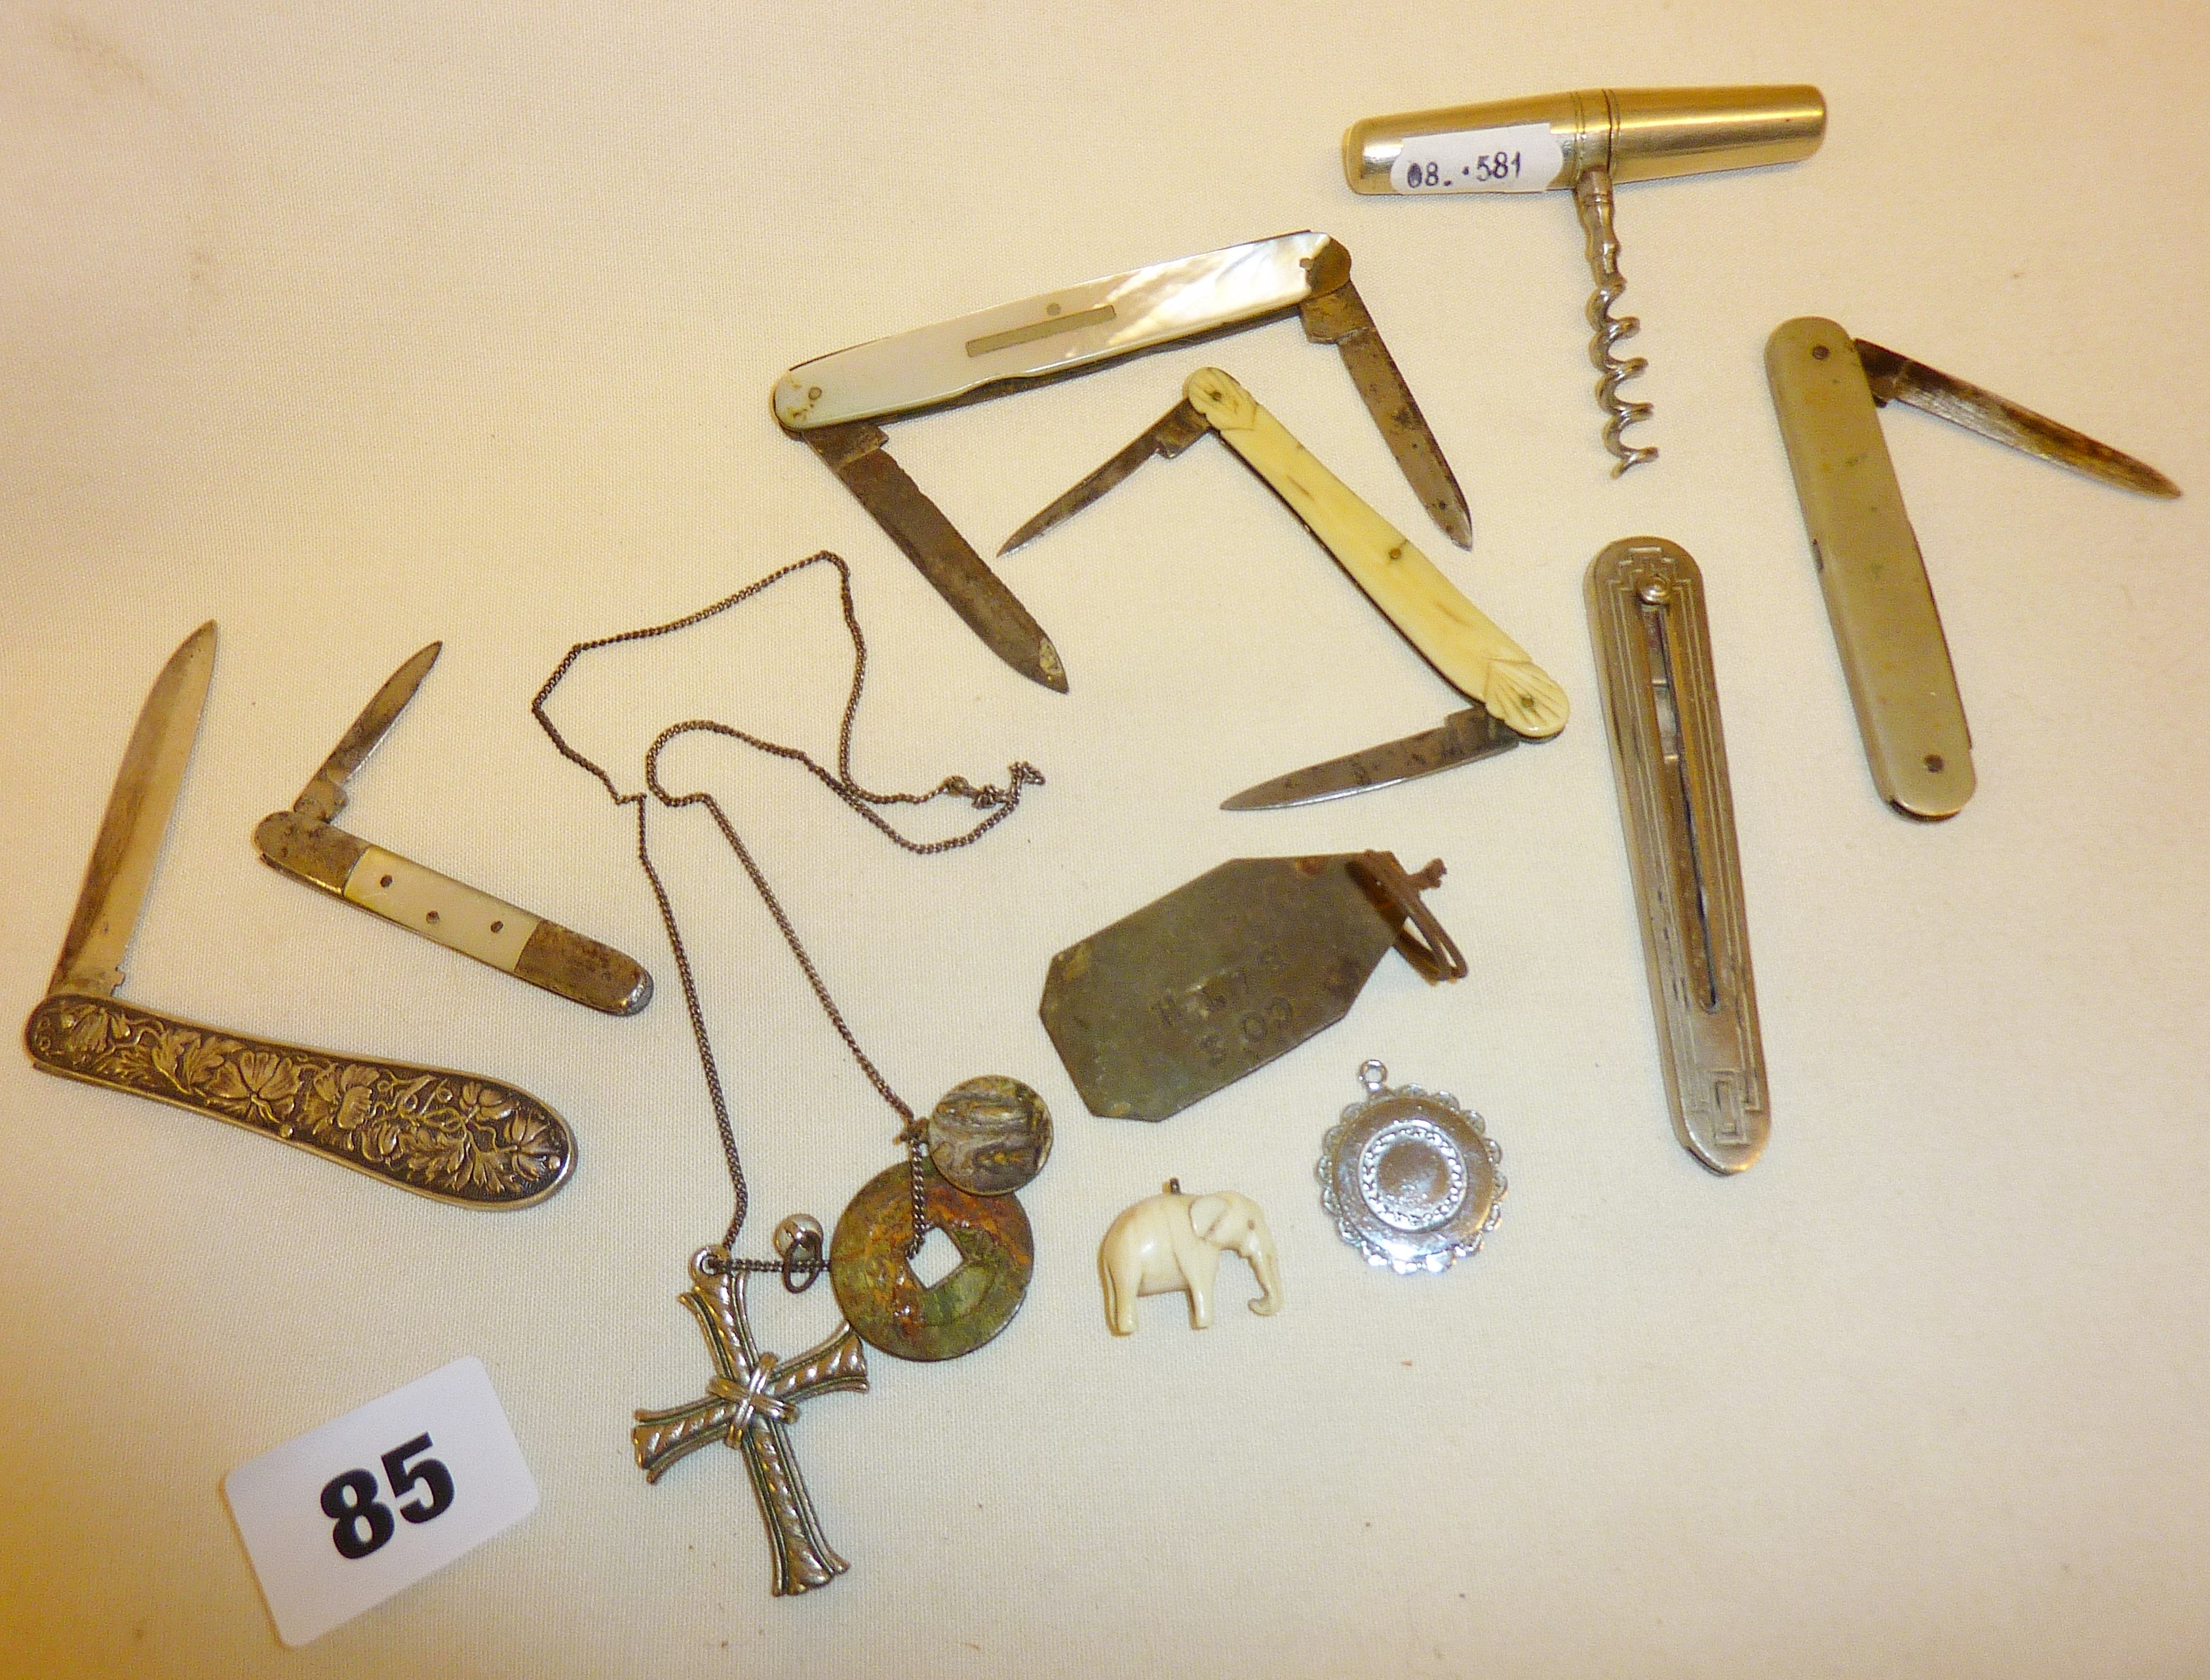 Old fruit pen and folding pocket knives, picnic corkscrew, dog tag etc